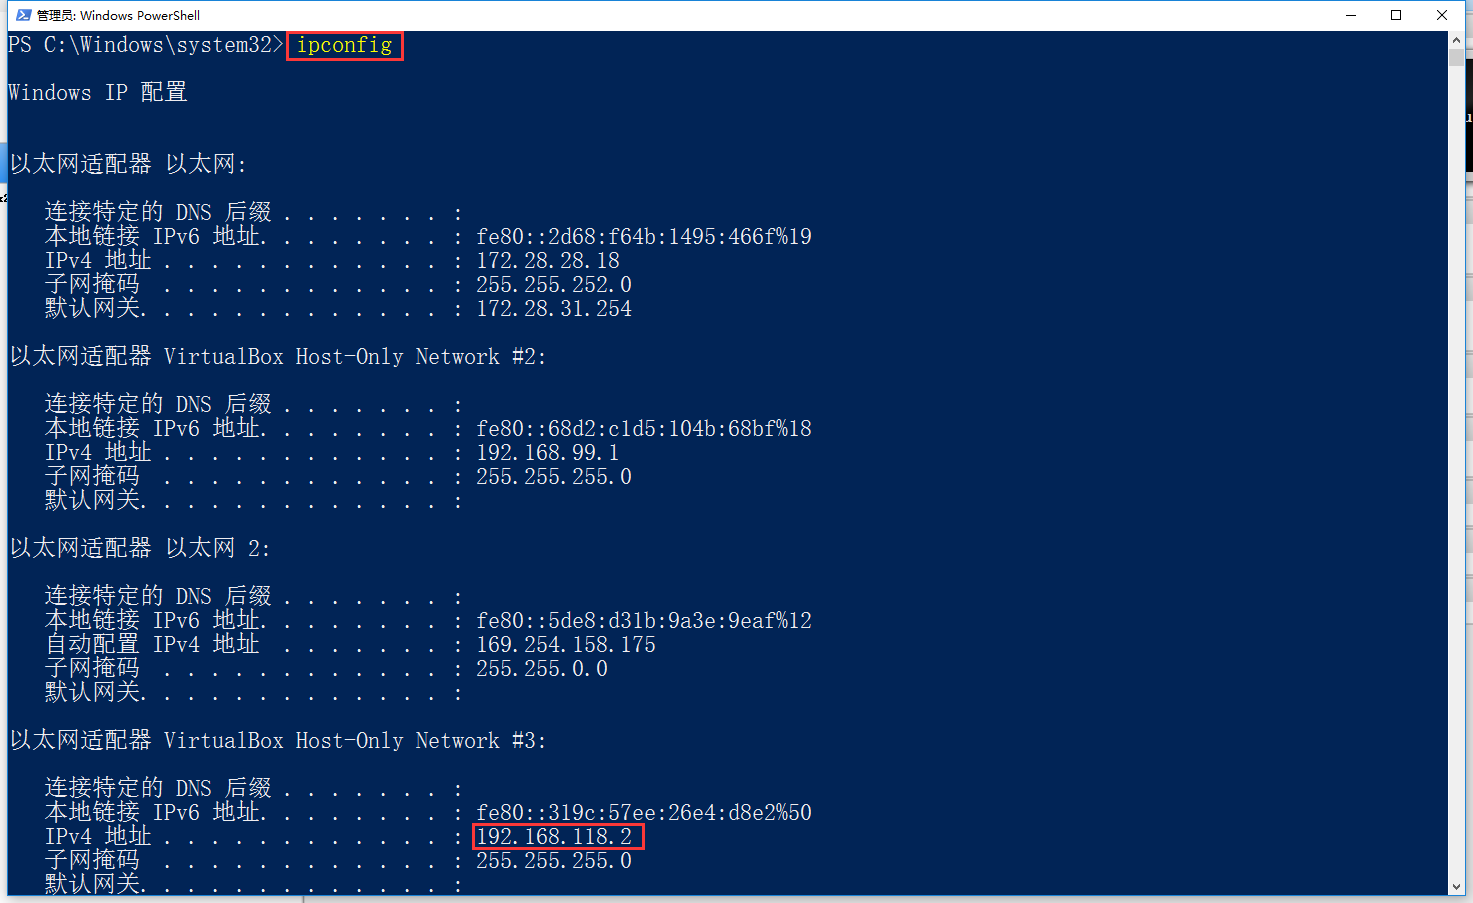 打开 Windows PowerShell，执行命令：ipconfig，查看最后一个 VirtualBox Host-Only Network #3